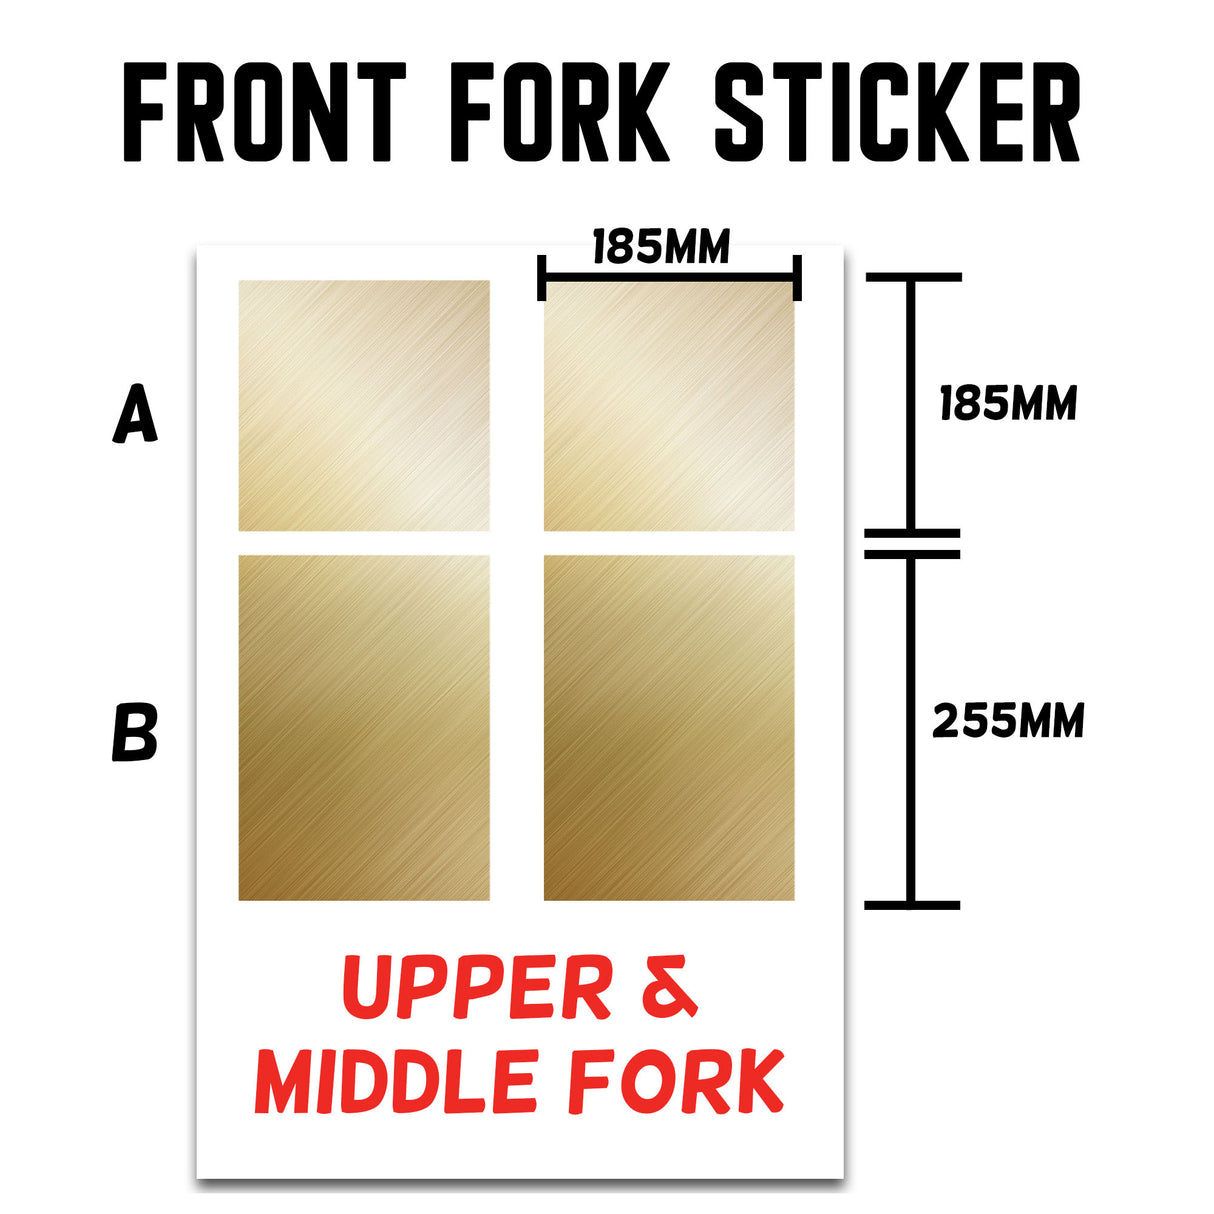 MX Drit Bike Front Fork Wrap Sticker Protection For Honda Yamaha Kawaski Suzuki [TT25 Metallic] - StickerBao Wheel Sticker Store